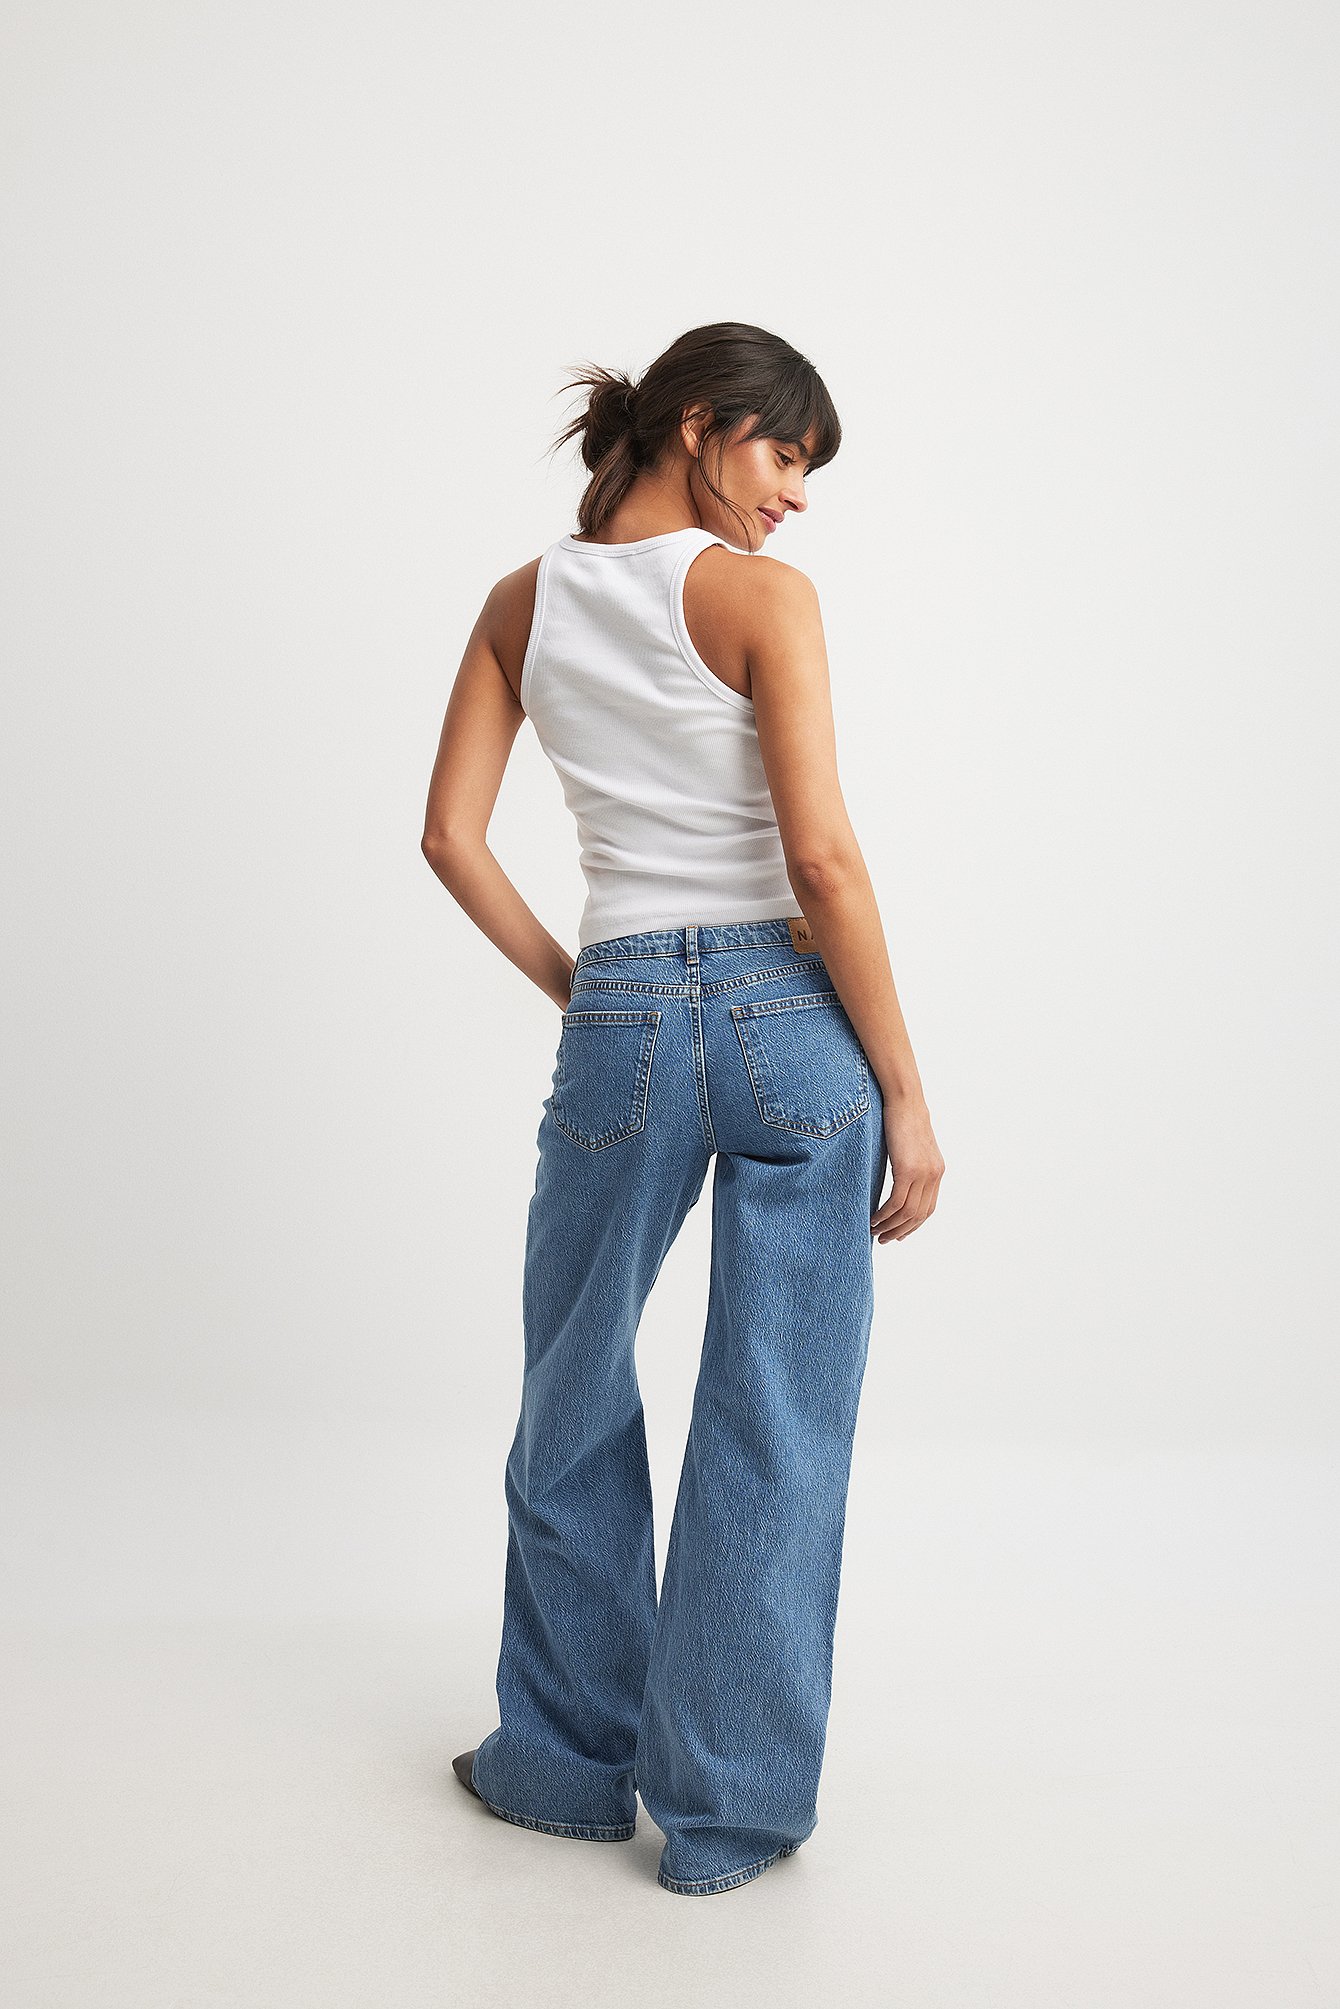 Wide-Leg Jeans for Women, Stylish Jeans